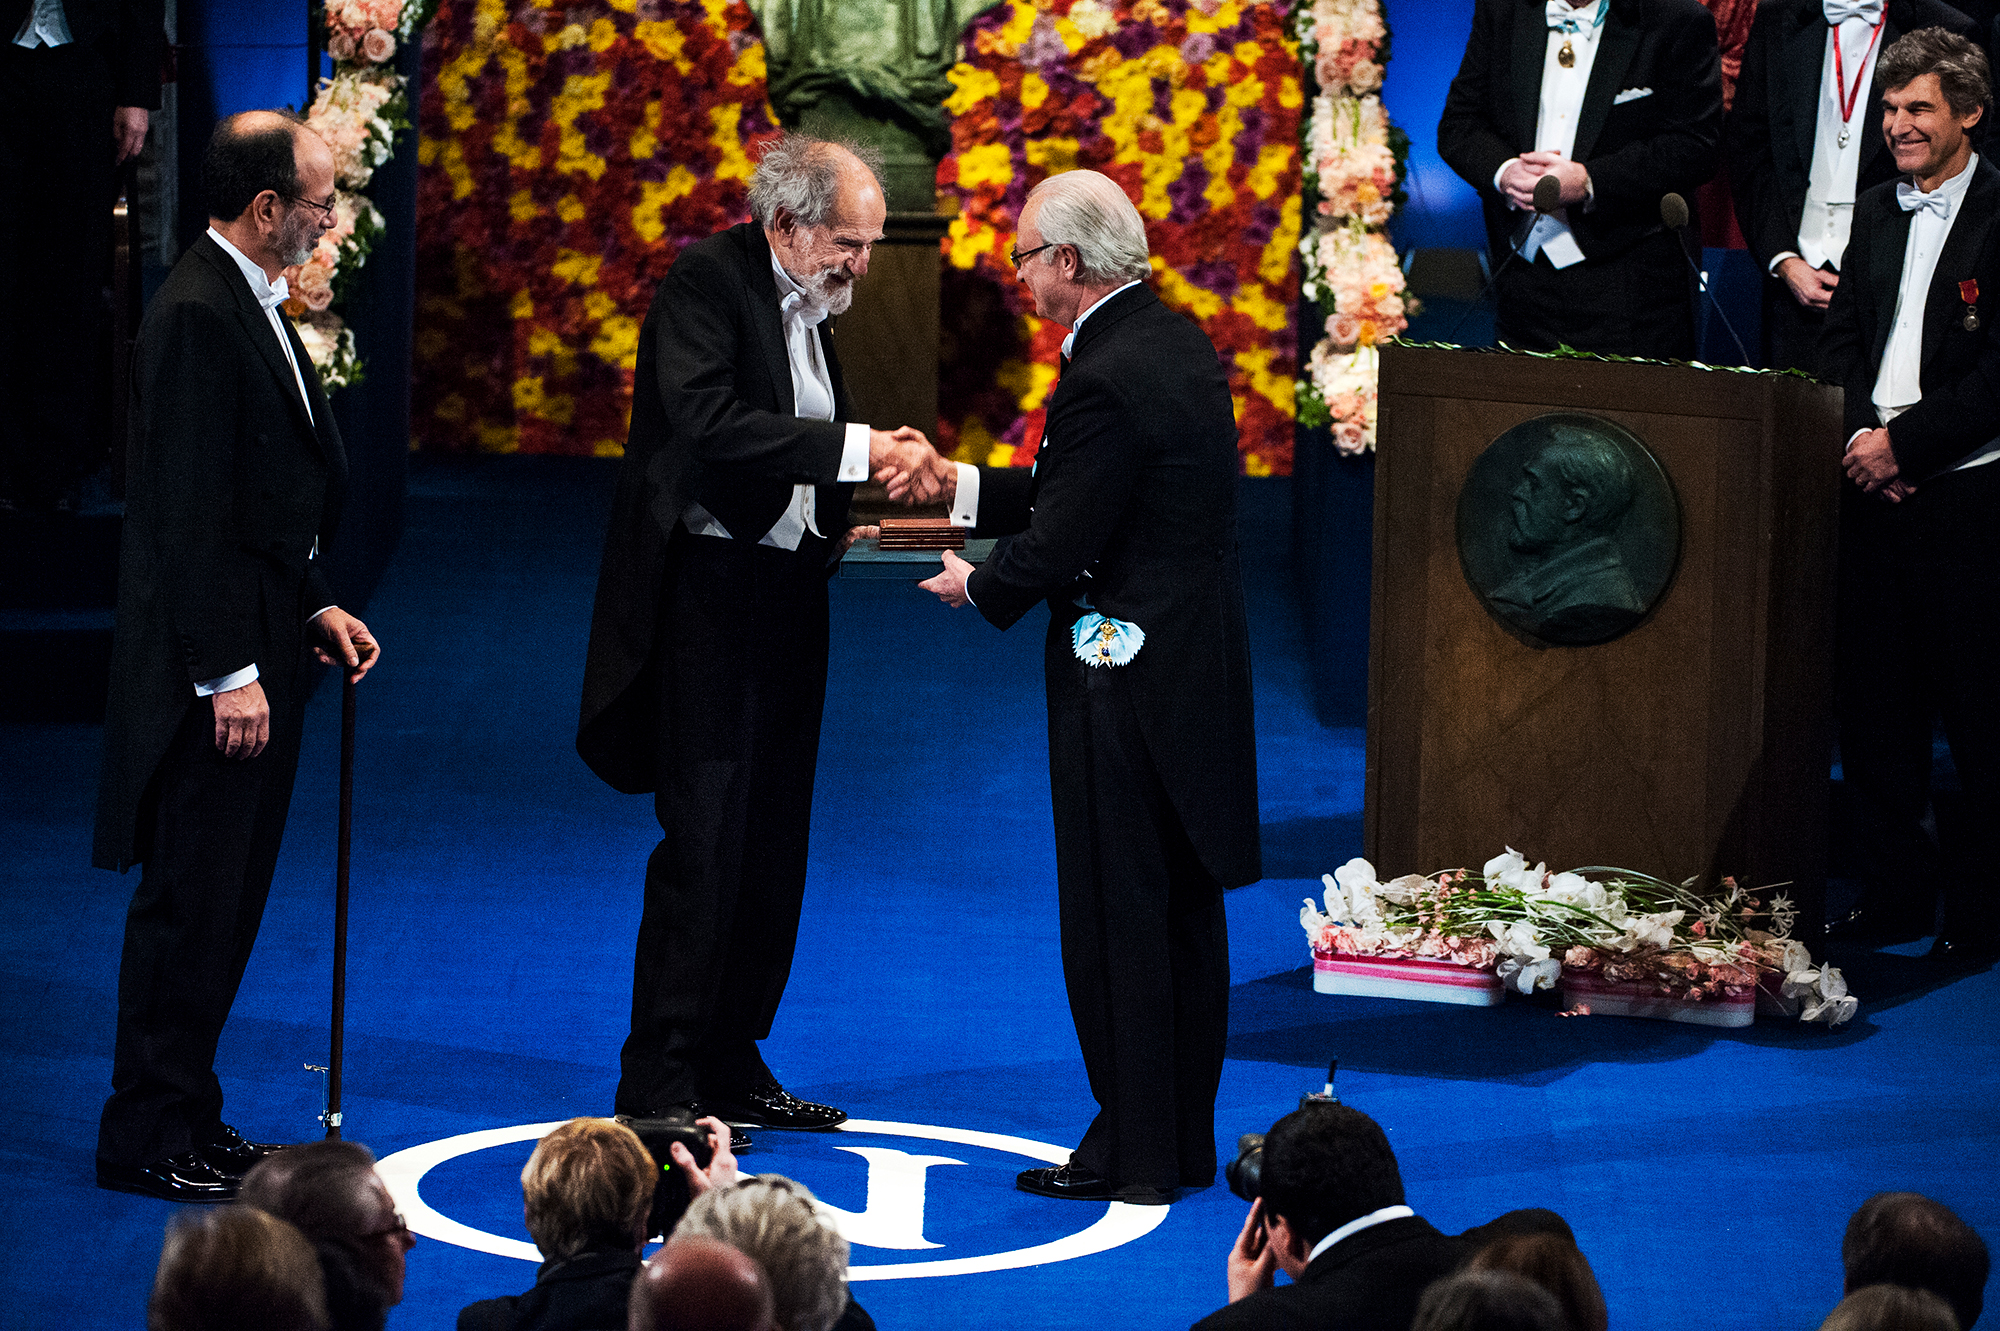 Lloyd Shapley, UCLA professor emeritus of economics and mathematics, is on stage accepting Nobel Memorial Prize. 